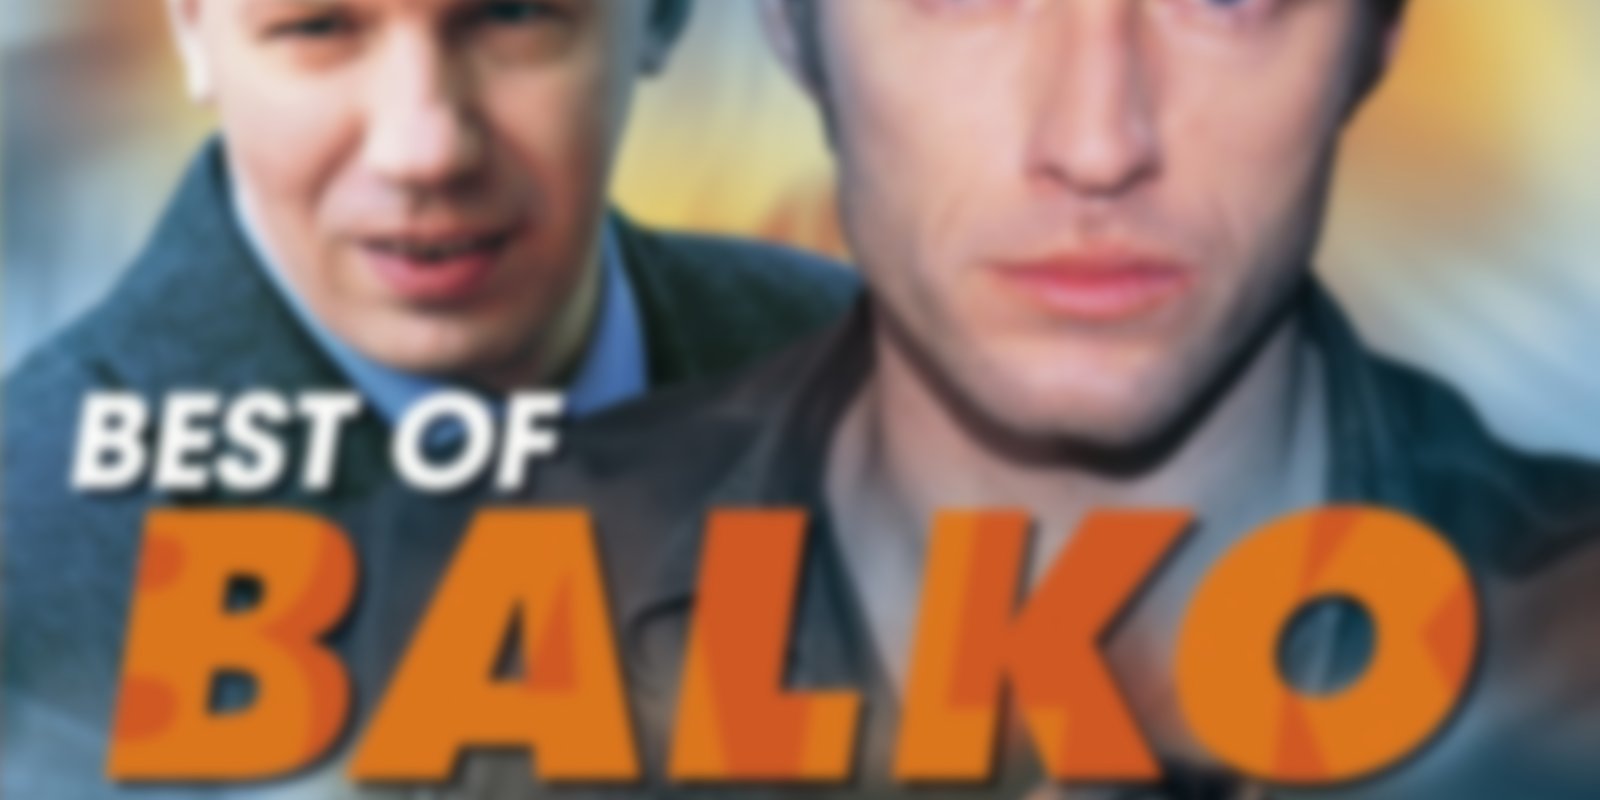 Best of Balko - Volume 1